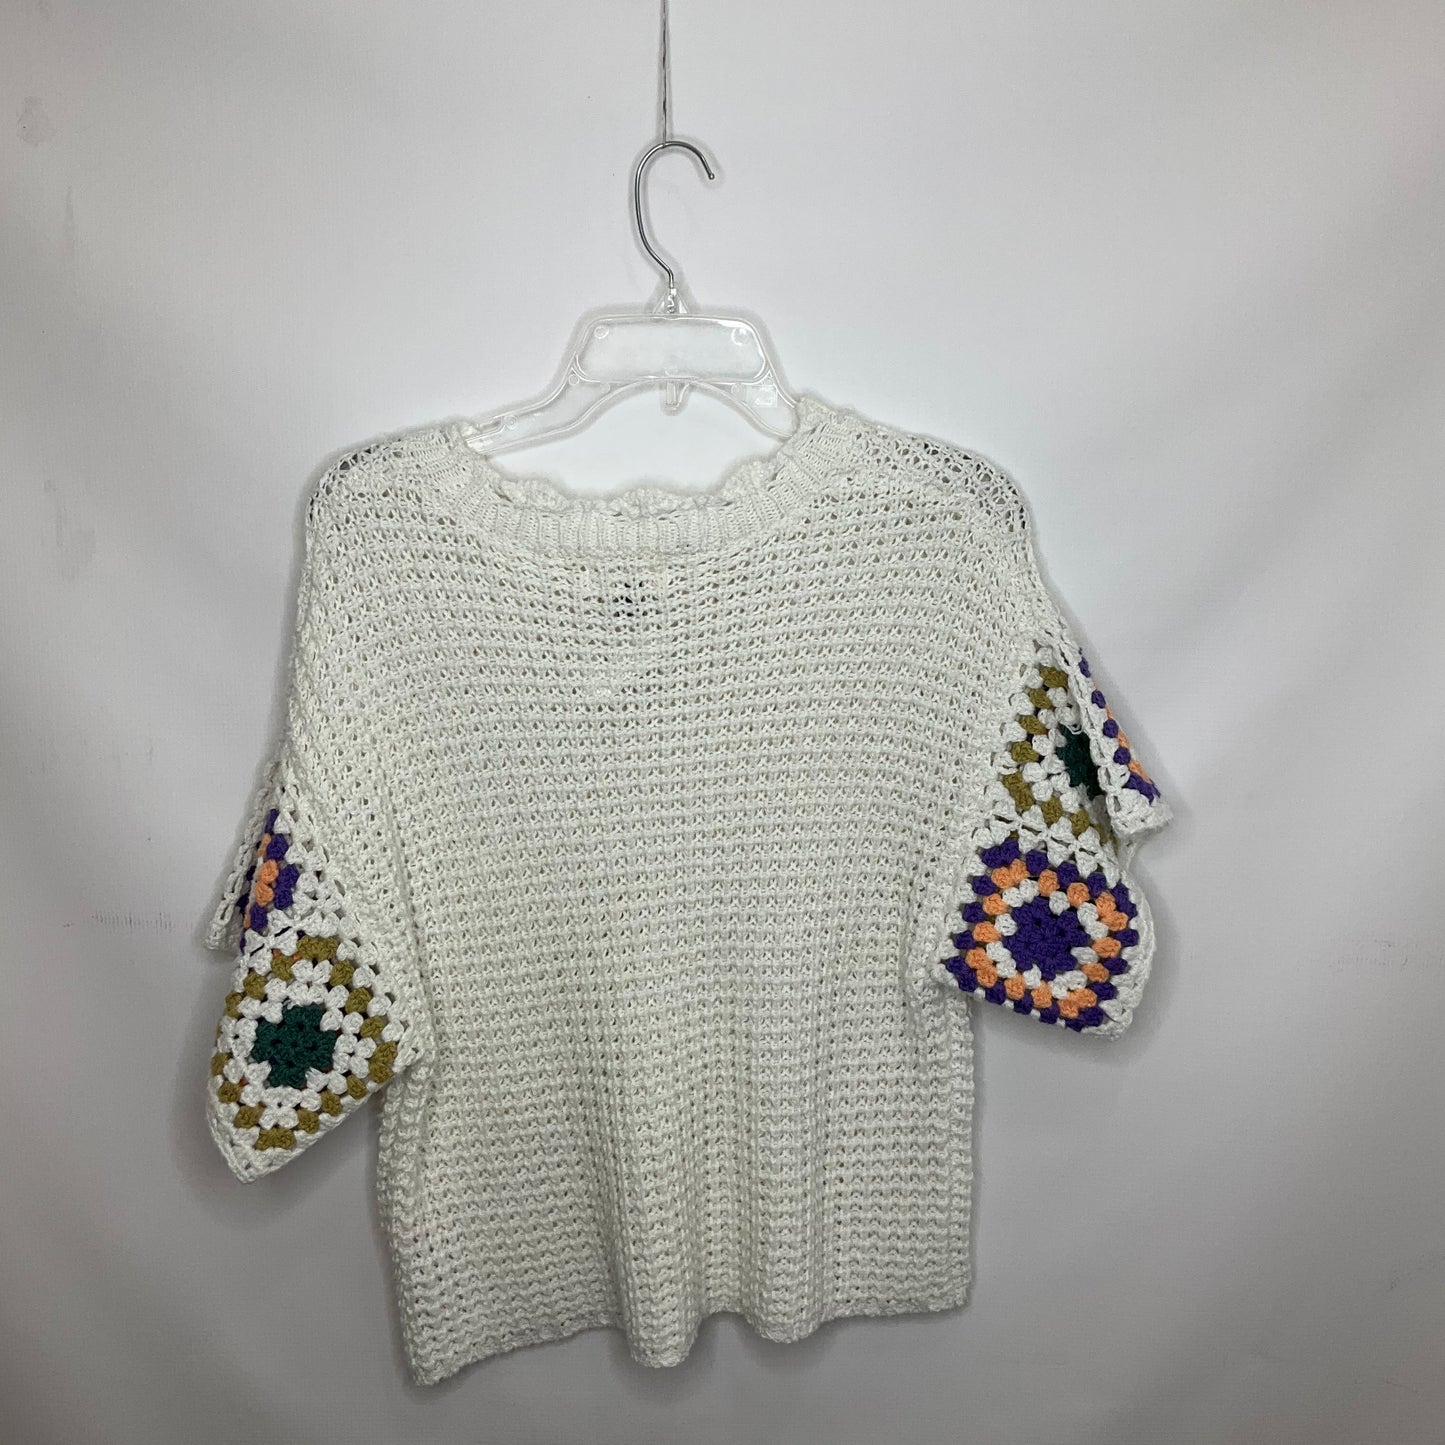 White Sweater Short Sleeve Universal Thread, Size M